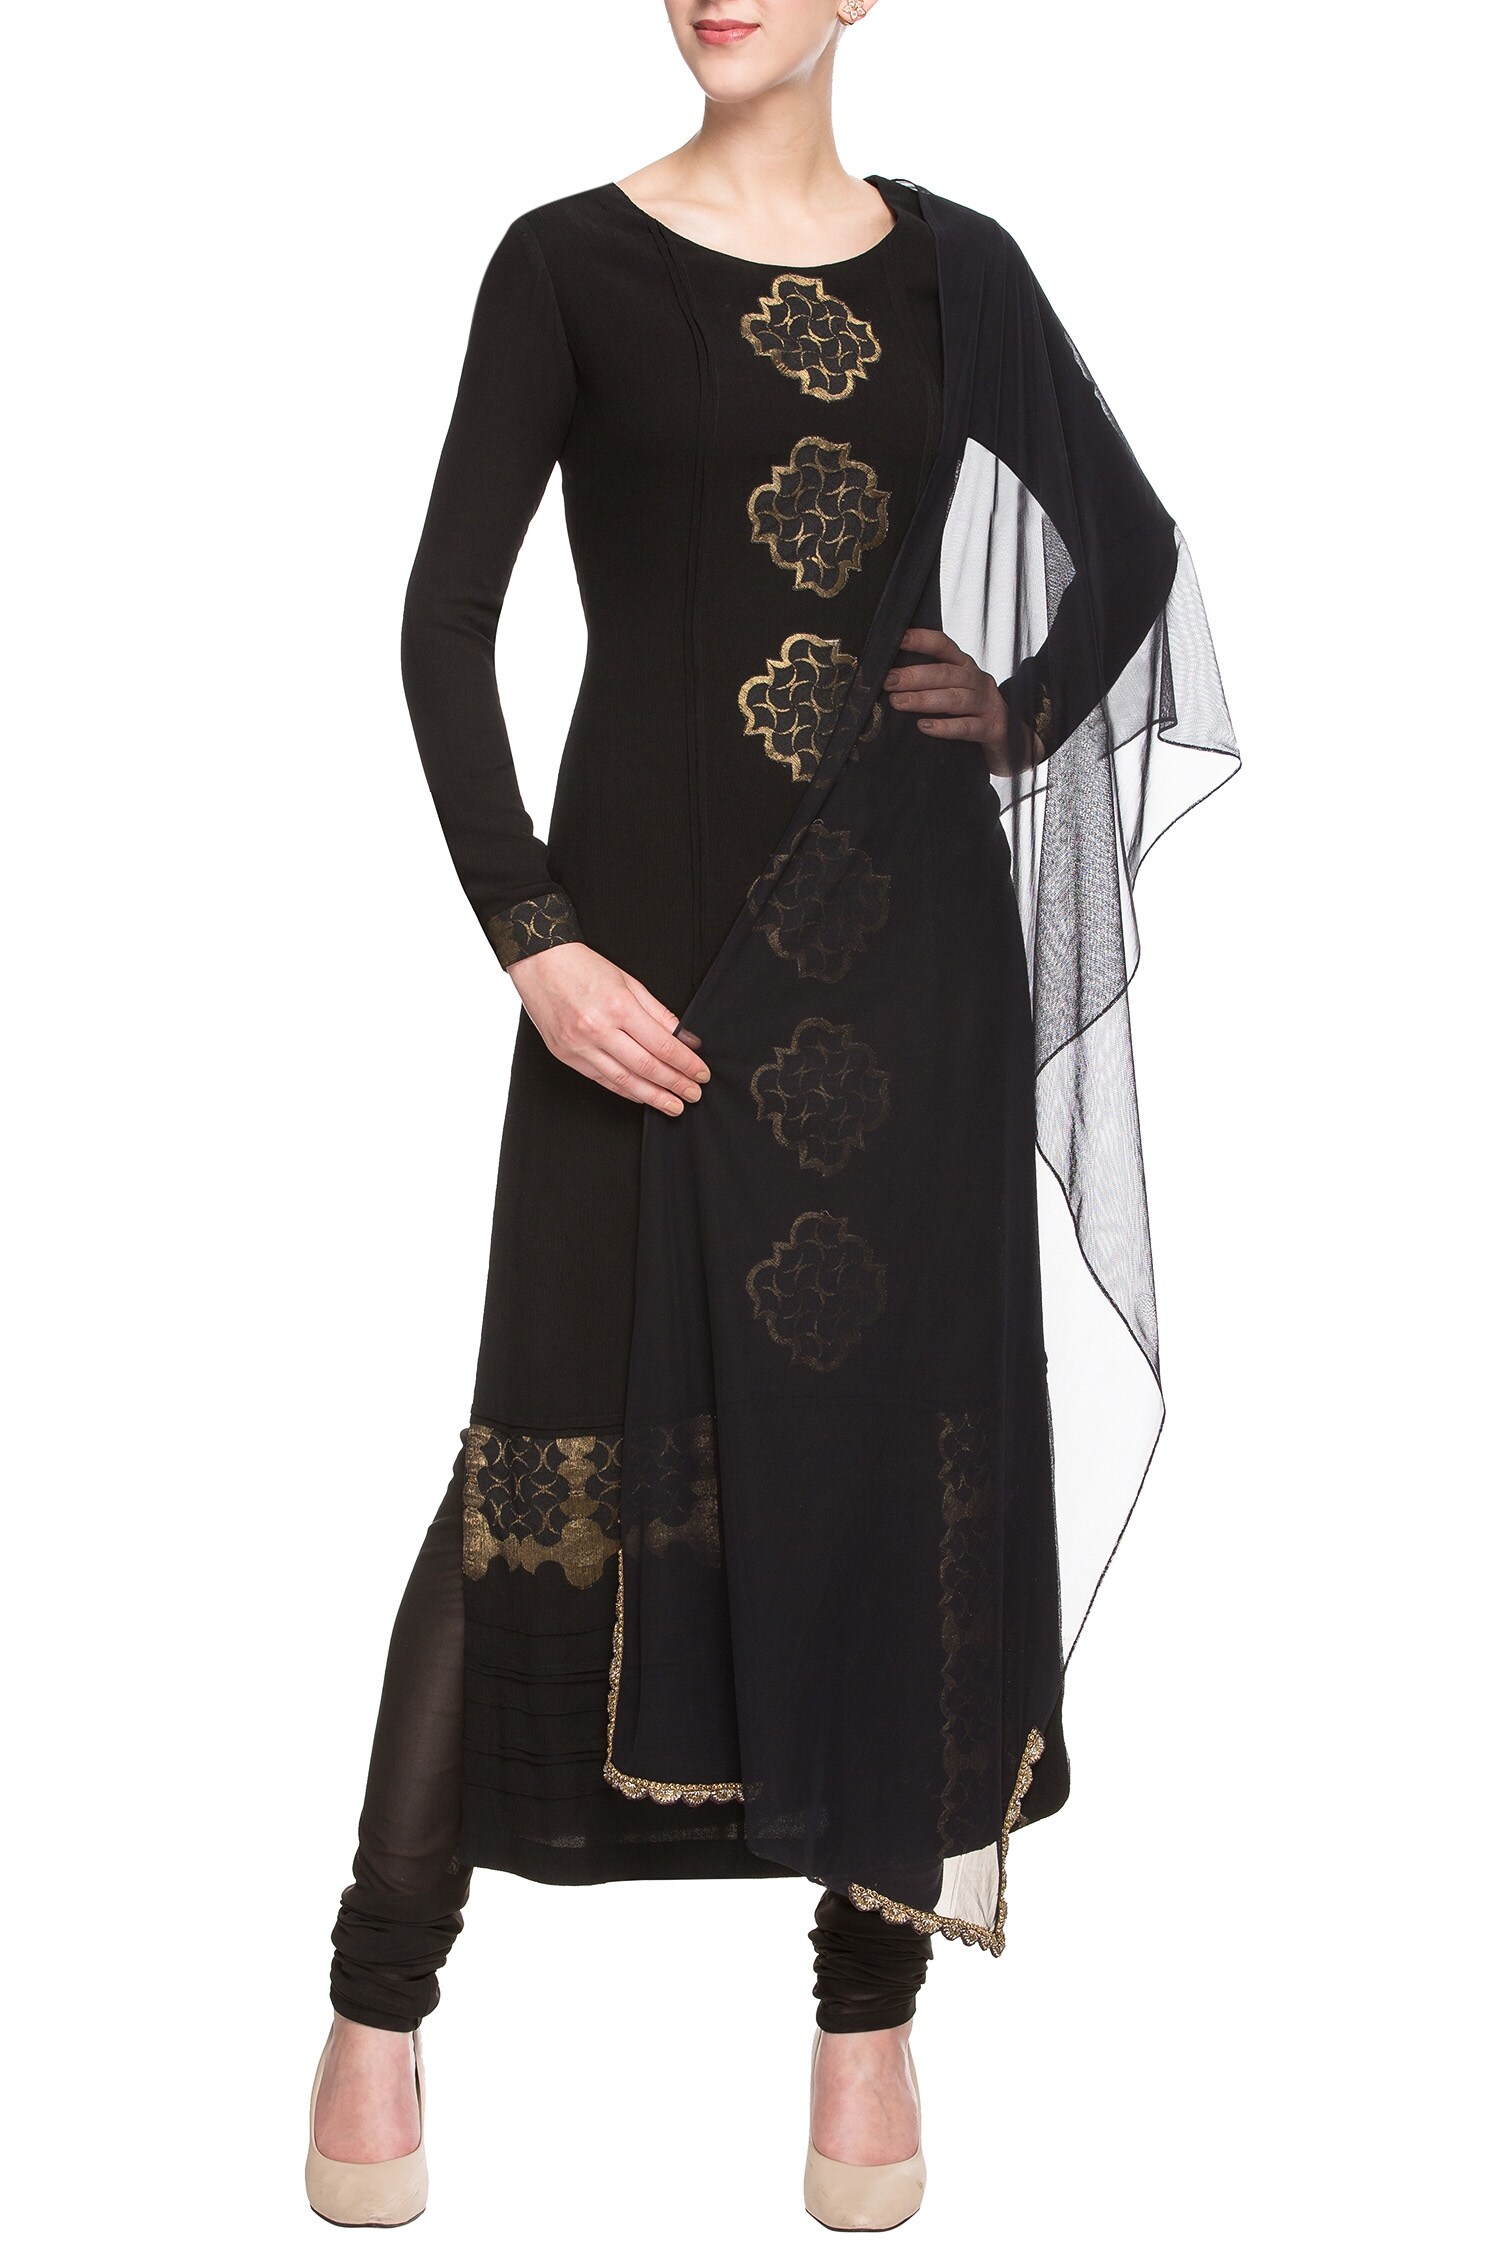 Buy Black kurta set with motifs by Osaa by Adarsh at Aza Fashions